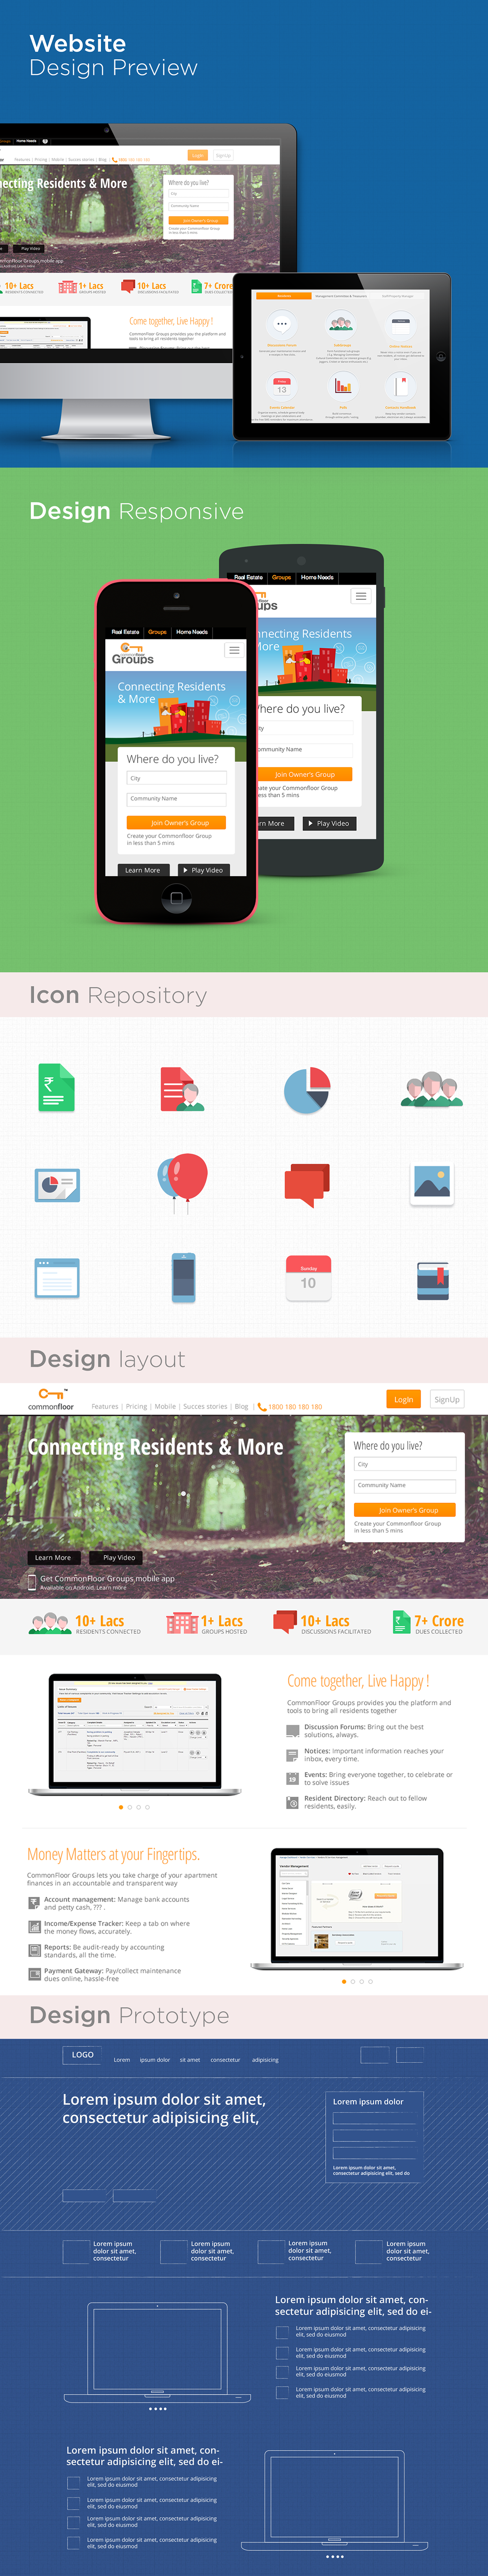 commonfloor  groups community Responsive Webdesign Icondesign visual design